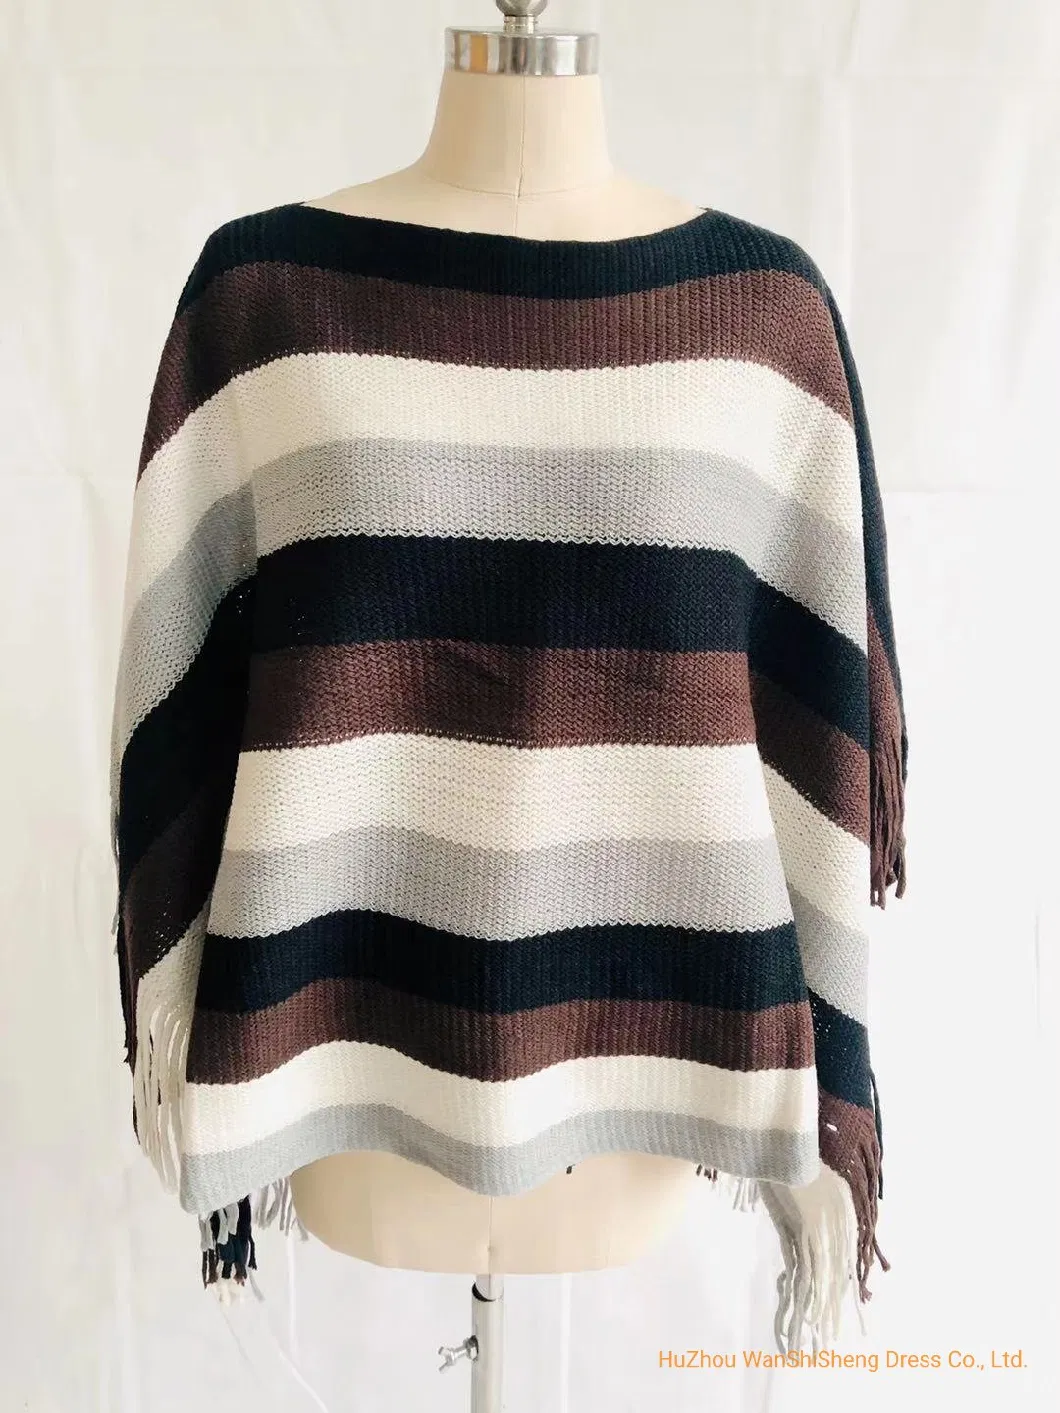 Ladies Fashion Stripes Ruana Knitted Shawl Warm Winter Poncho/Ruana/Warp/Cape